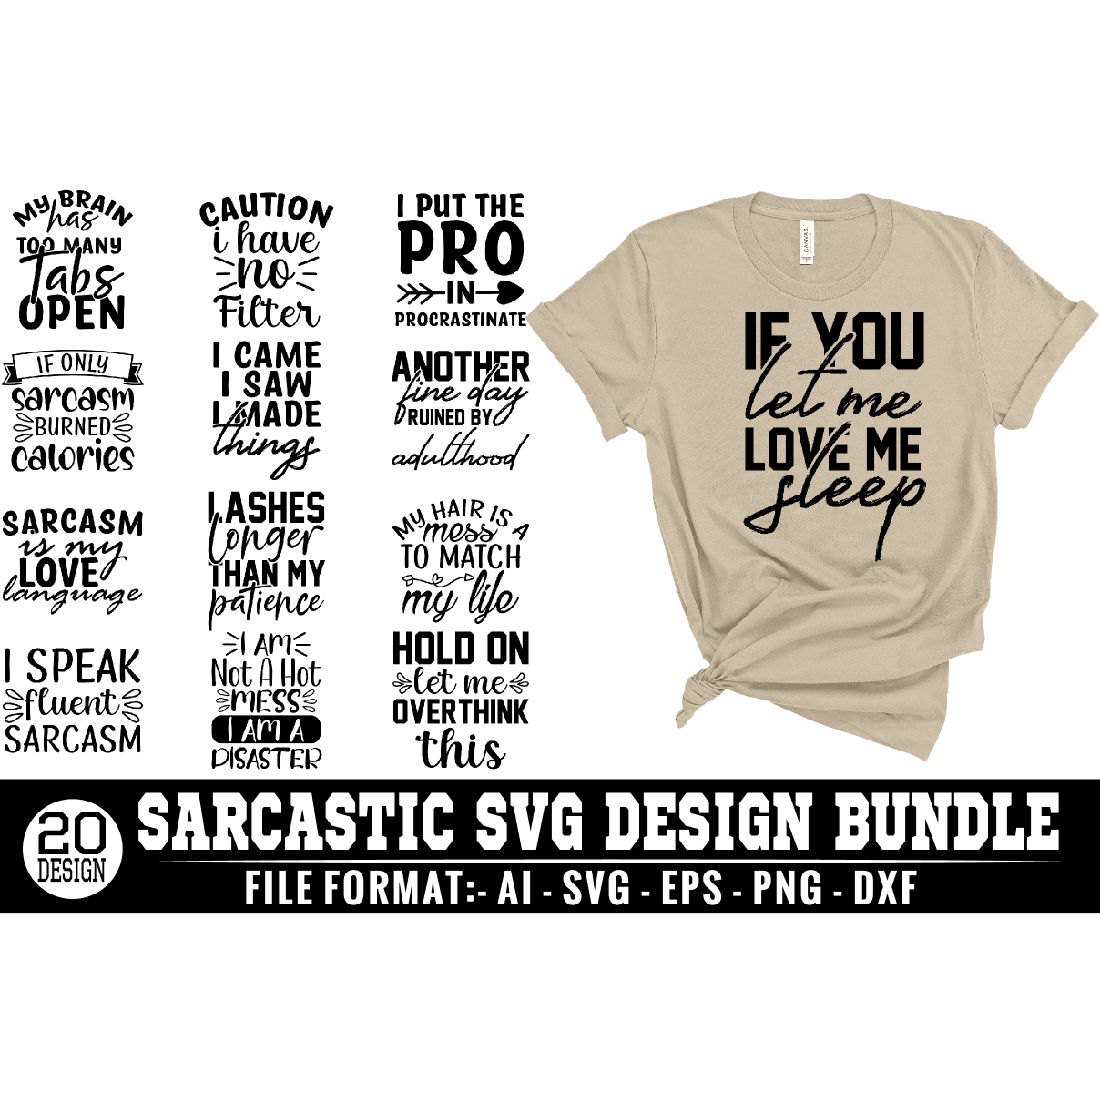 Sarcastic SVG Design Bundle cover image